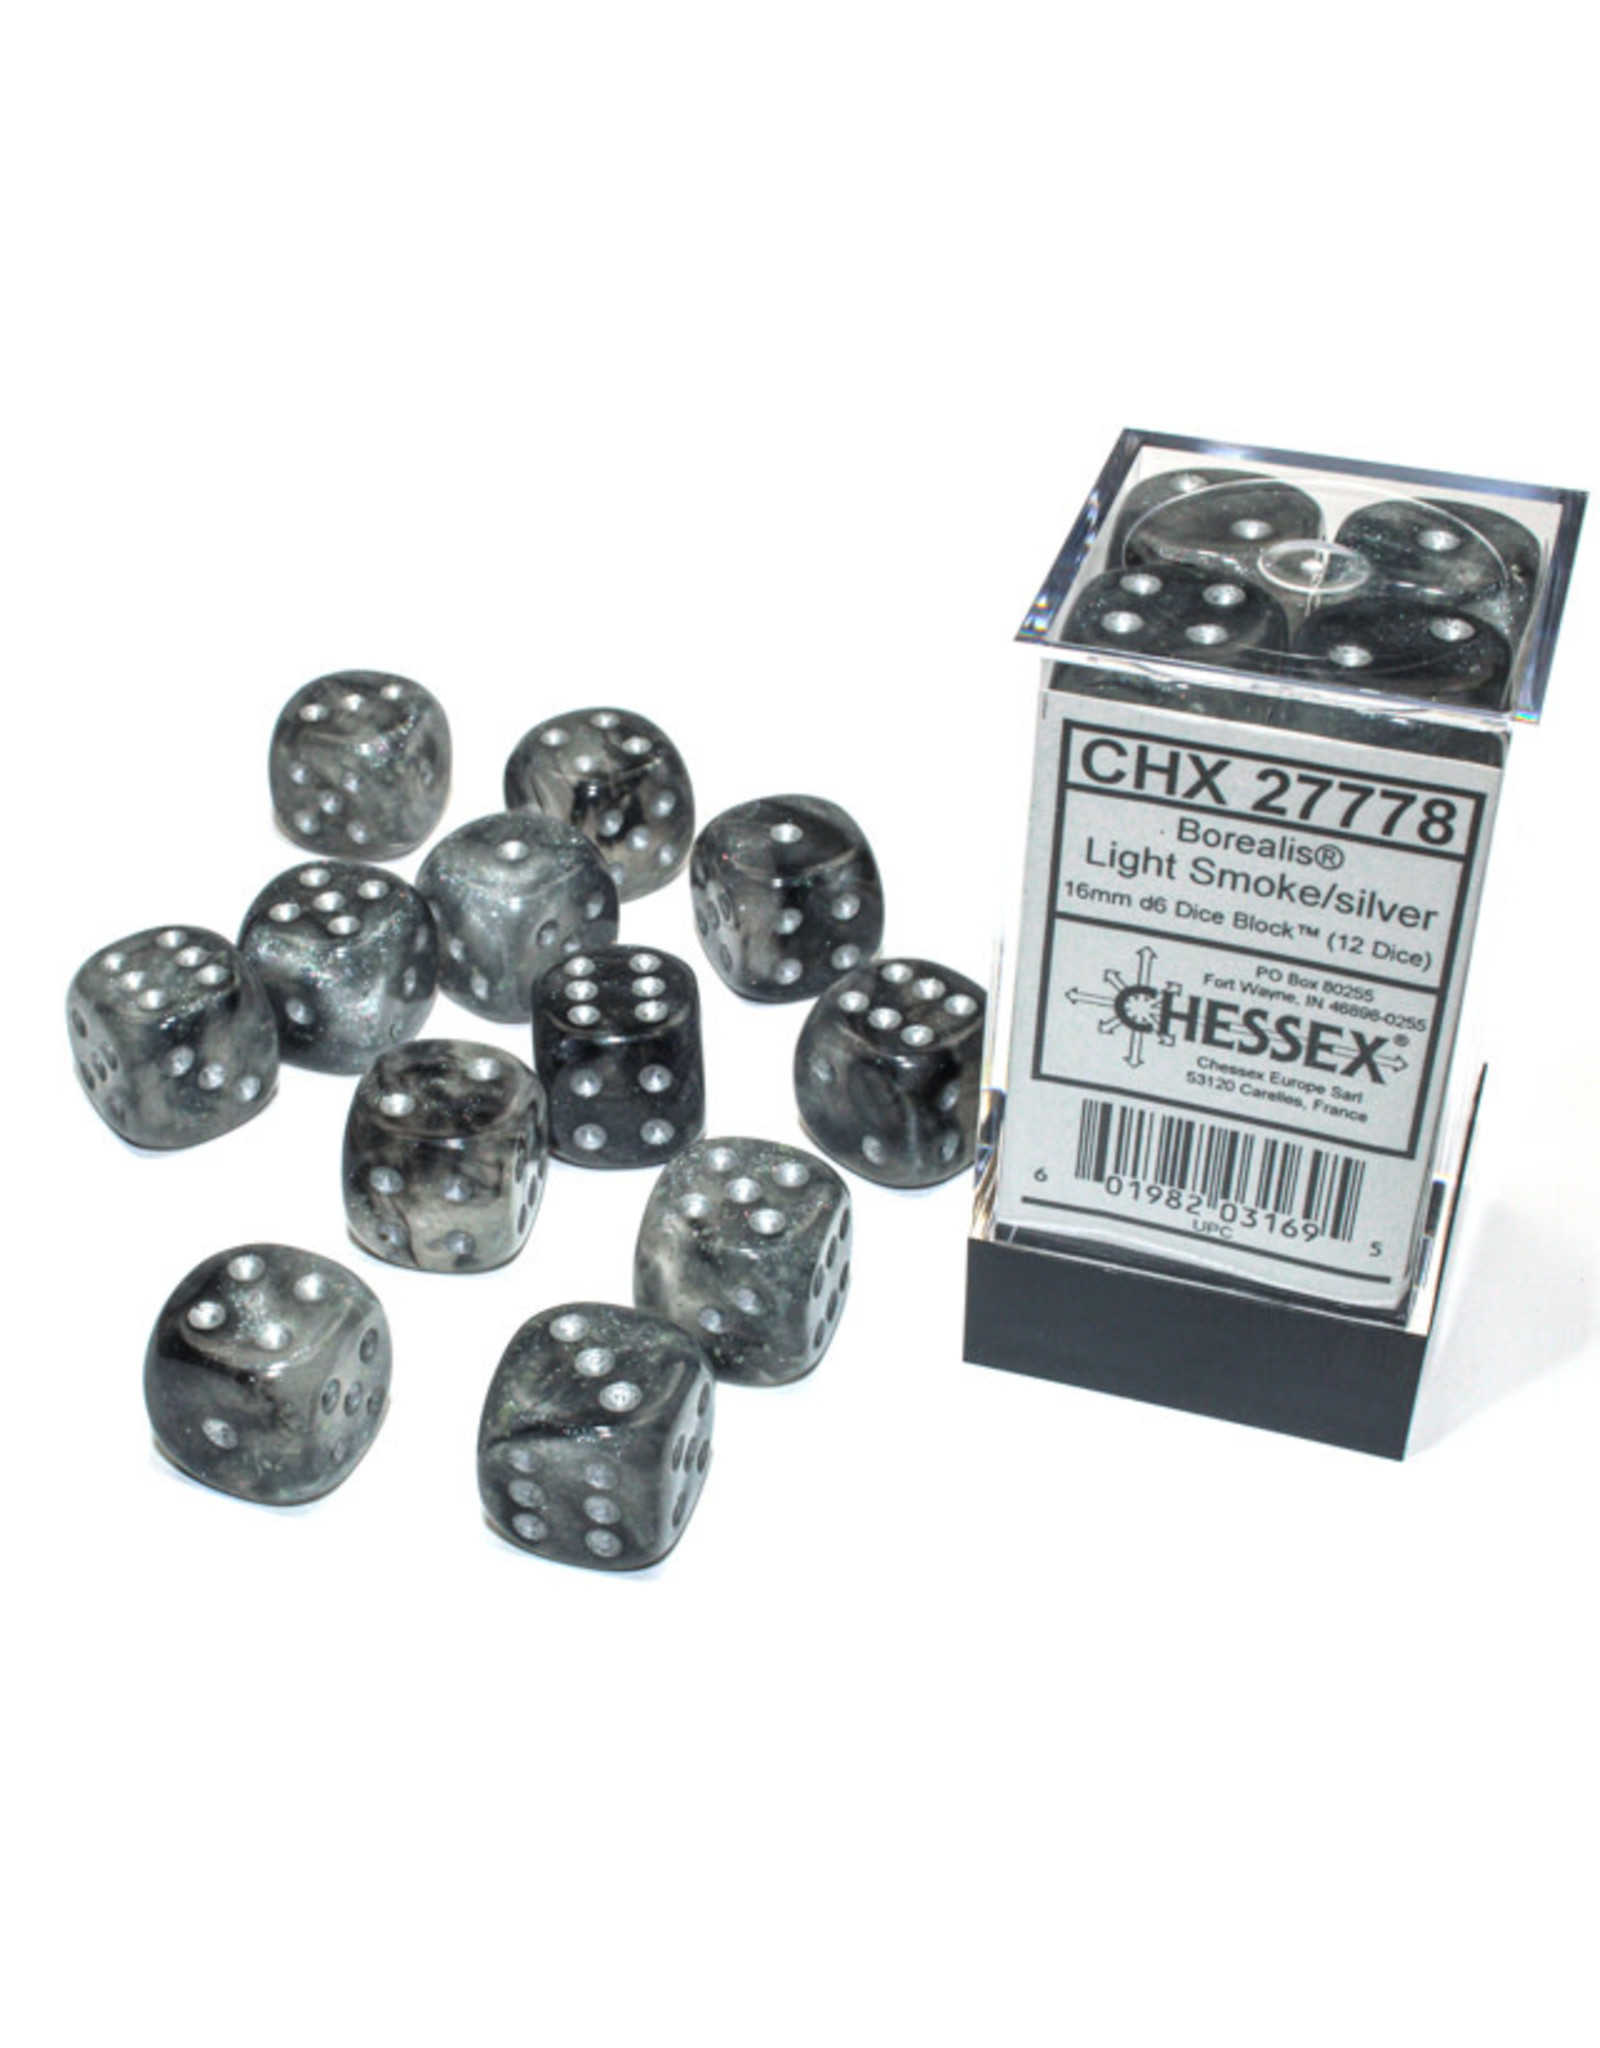 Chessex Borealis: 16mm d6 Light Smoke/silver Luminary Dice Block (12 dice) CHX 27778